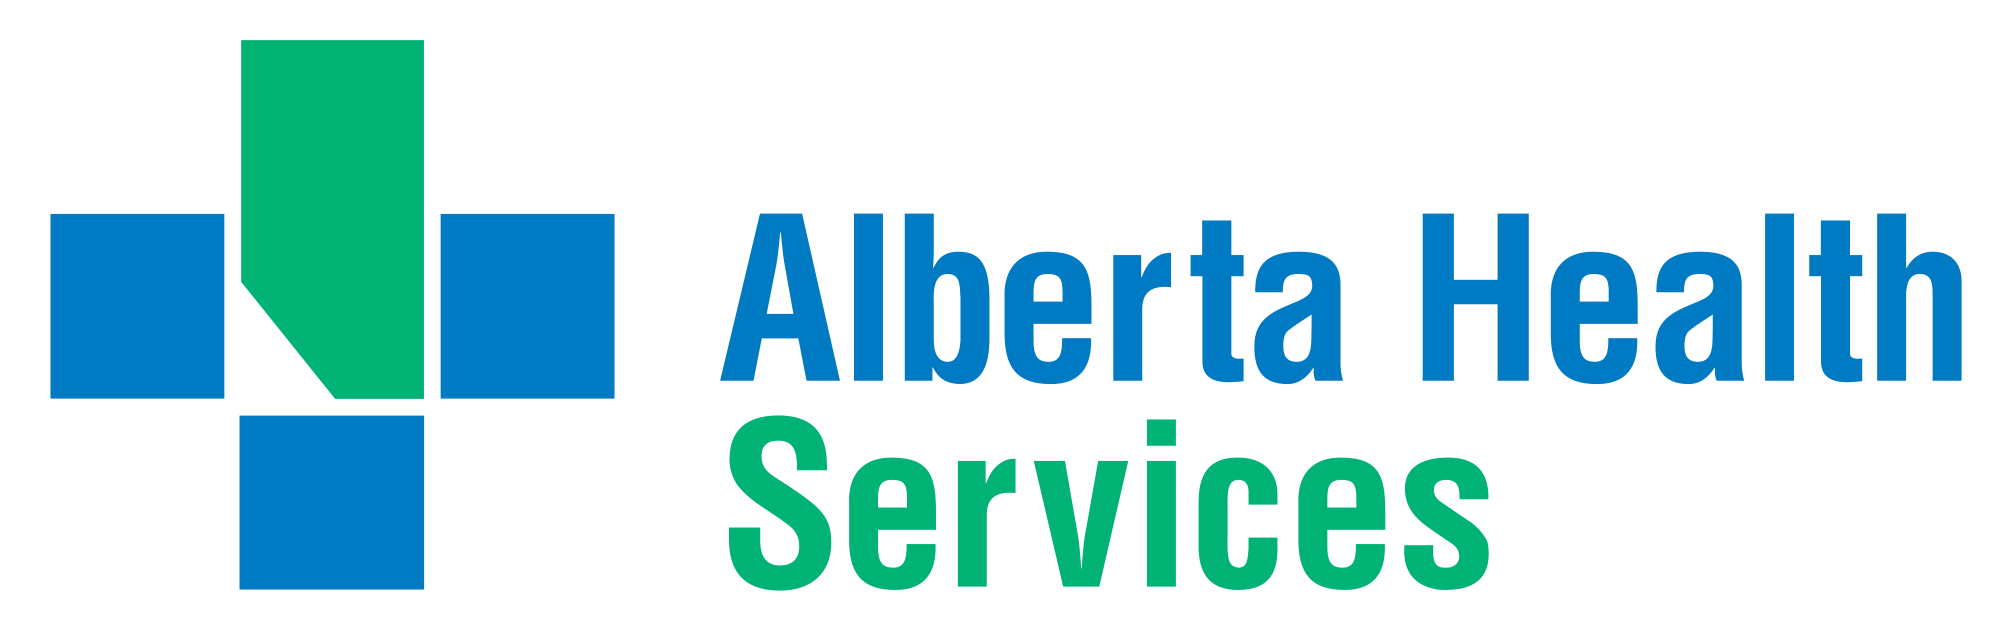 alberta-health-services-logo